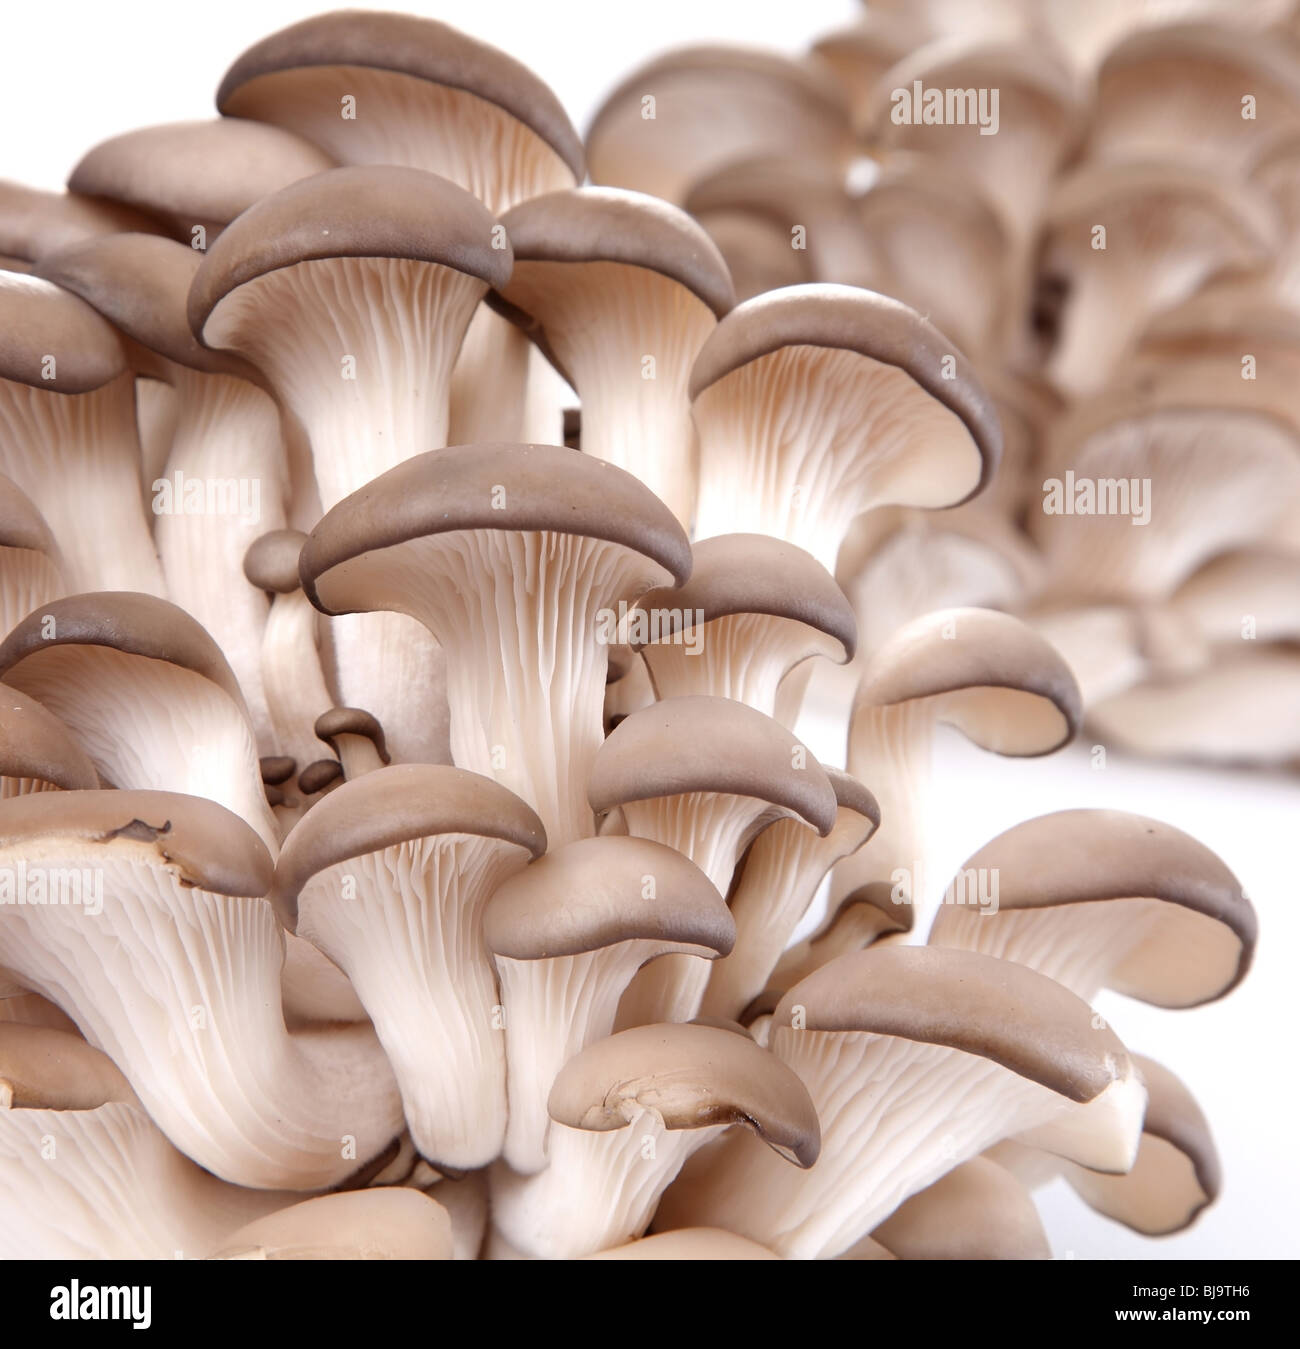 Oyster mushrooms Stock Photo